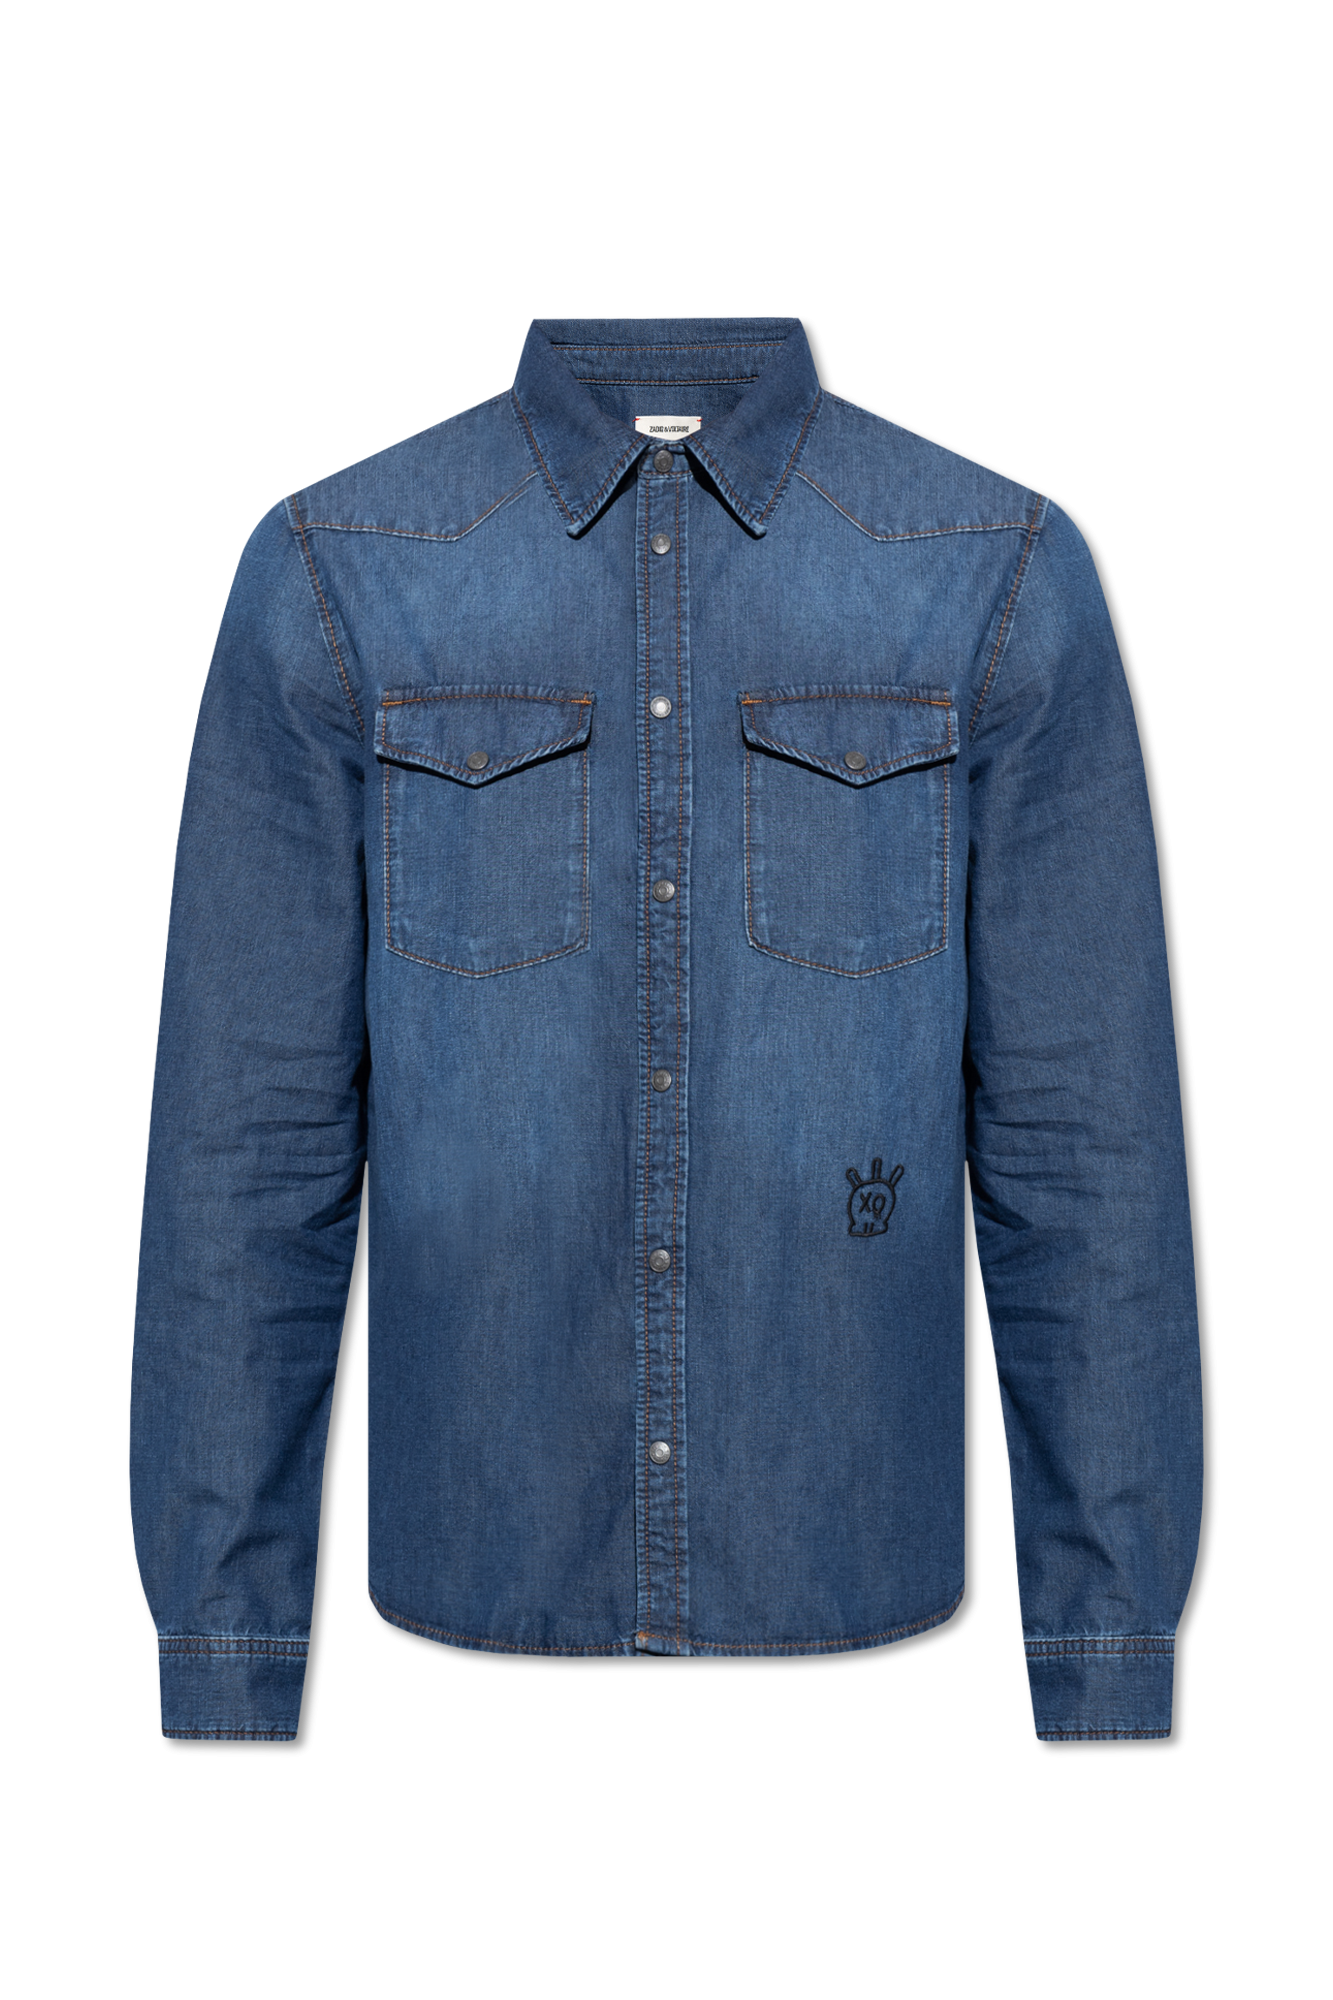 isabel marant etoile gabadi wool jacket ‘Stan’ shirt from ‘XO Project’ capsule collection